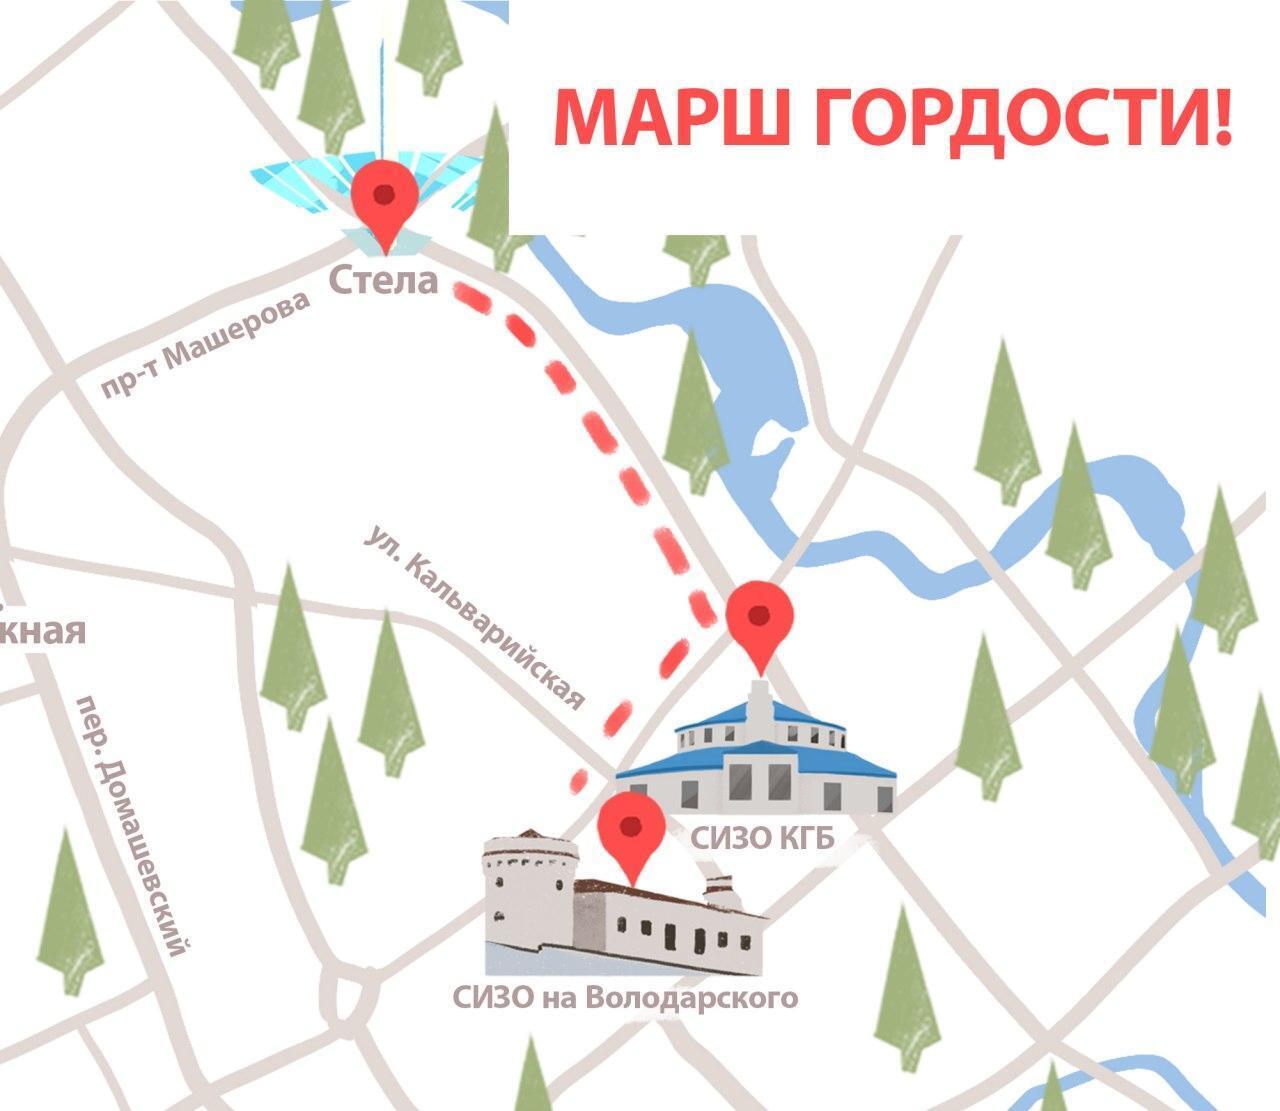 Схема маршруту Маршу Гордості.